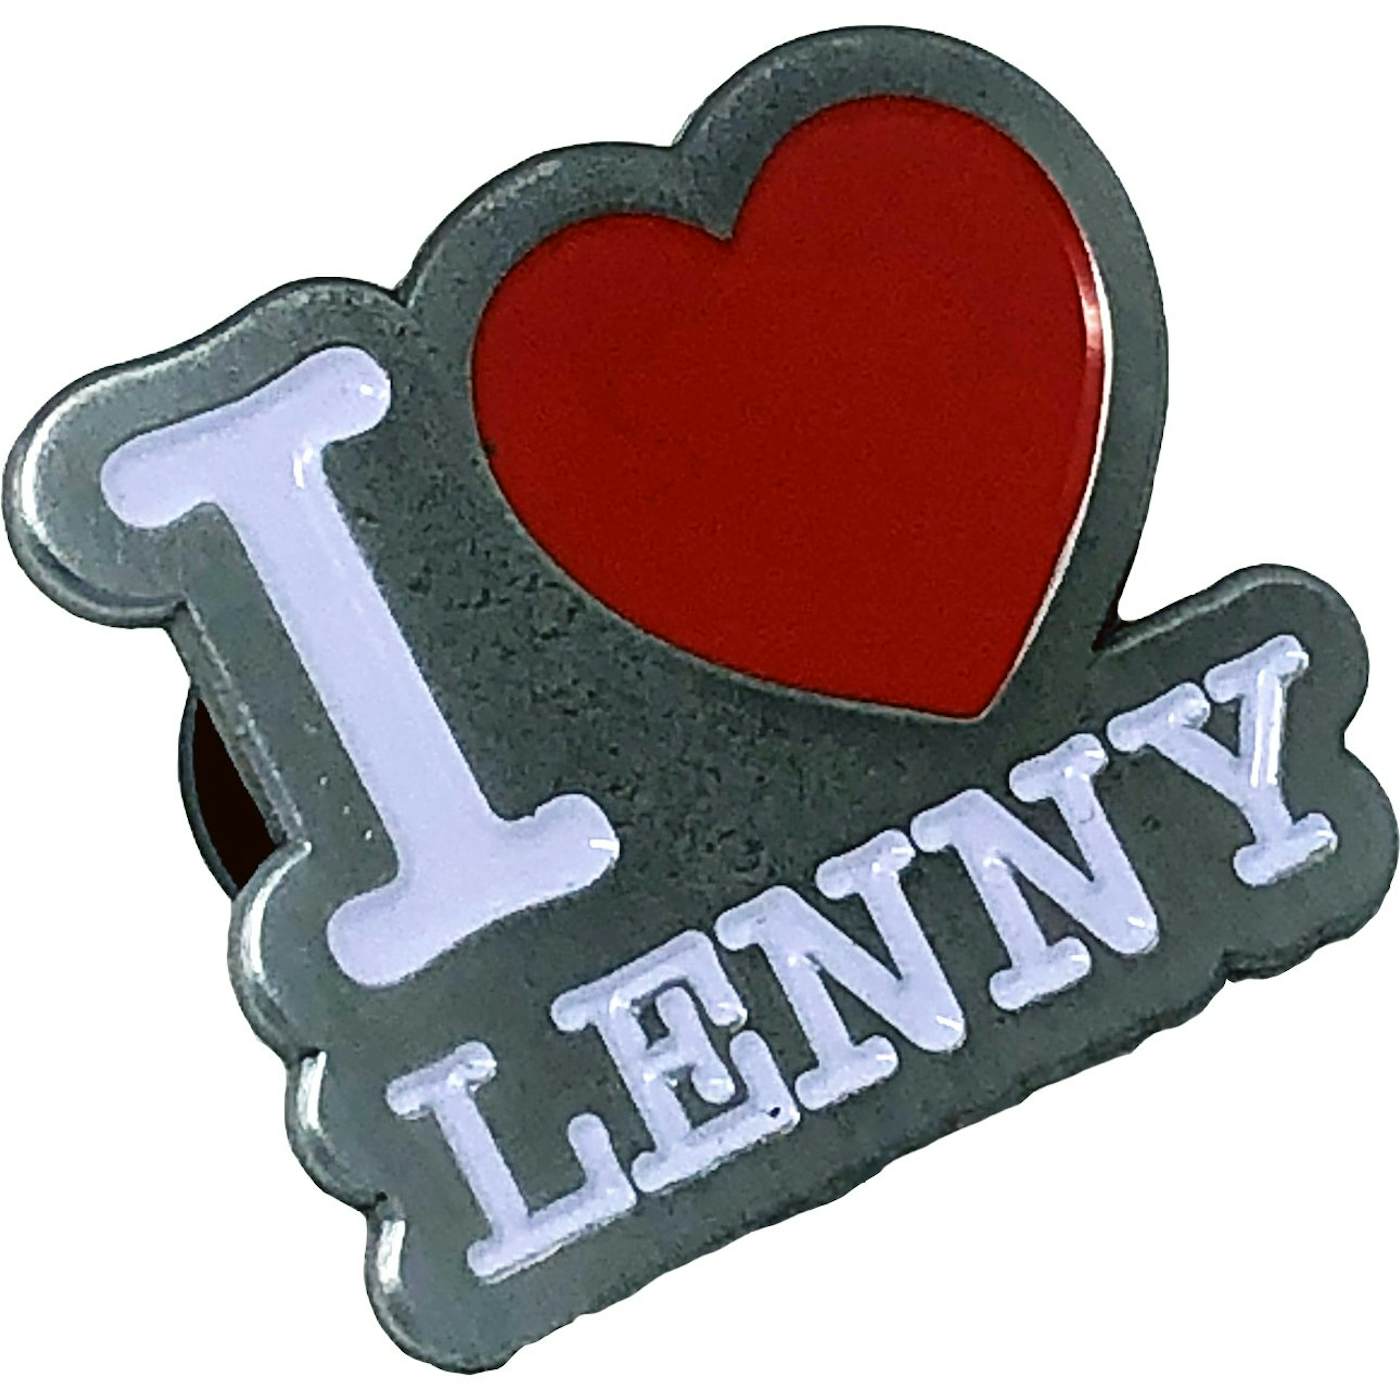 Lenny Lashley's Gang of One Lenny Lashley Gang of One - I Love Lenny - 1.25" Enamel Pin